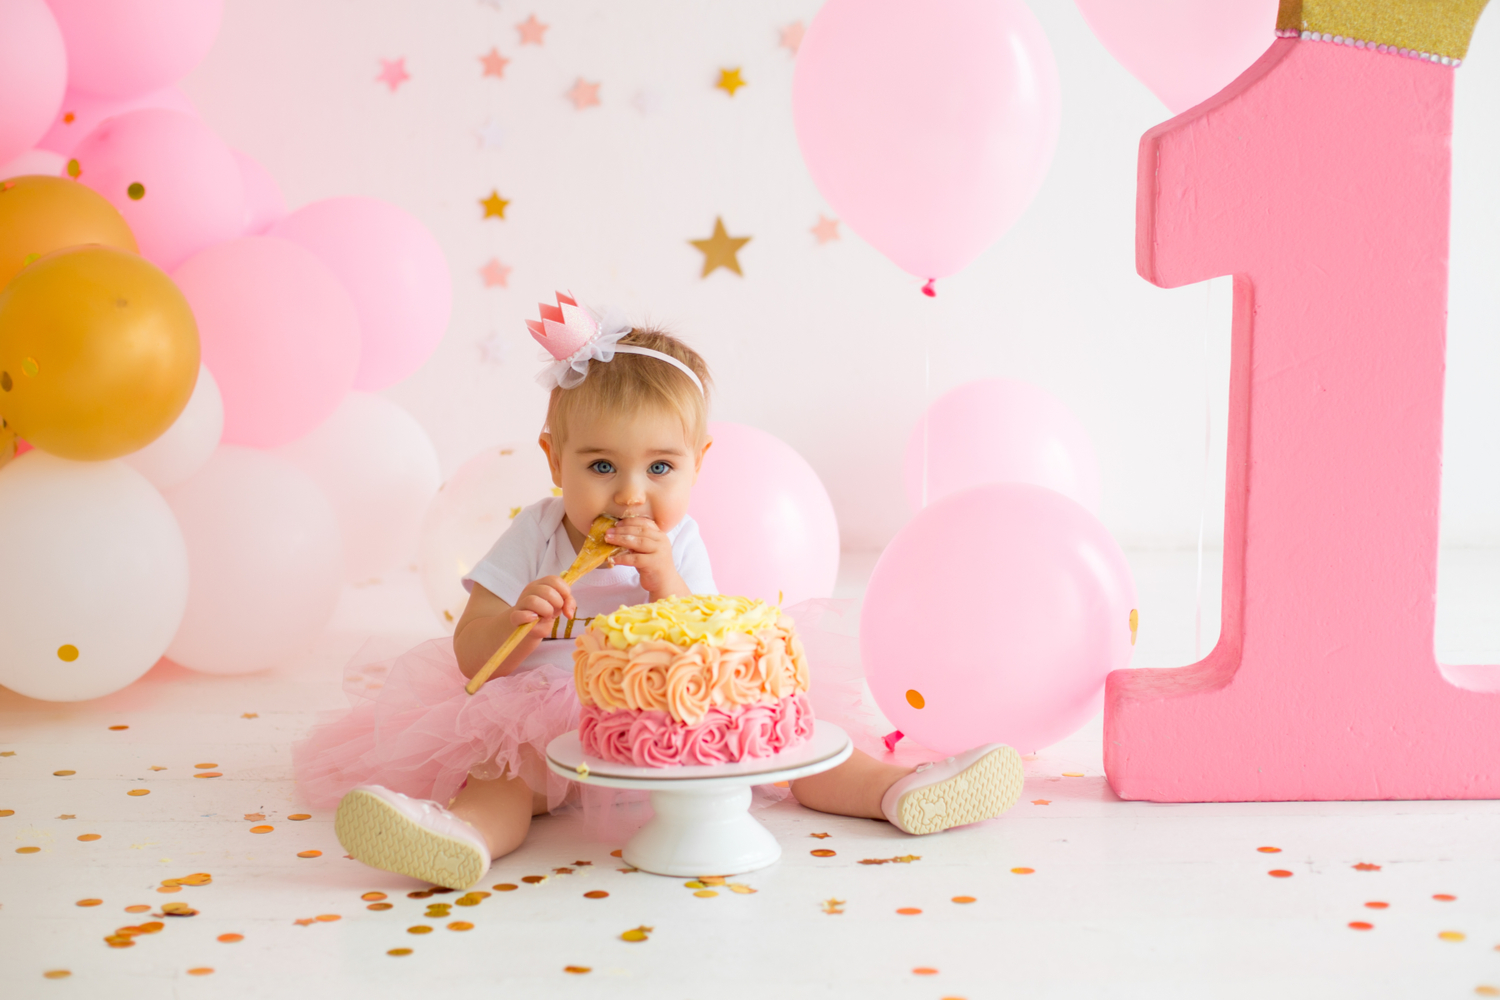 21 Gorgeous Baby Shower Cake Ideas